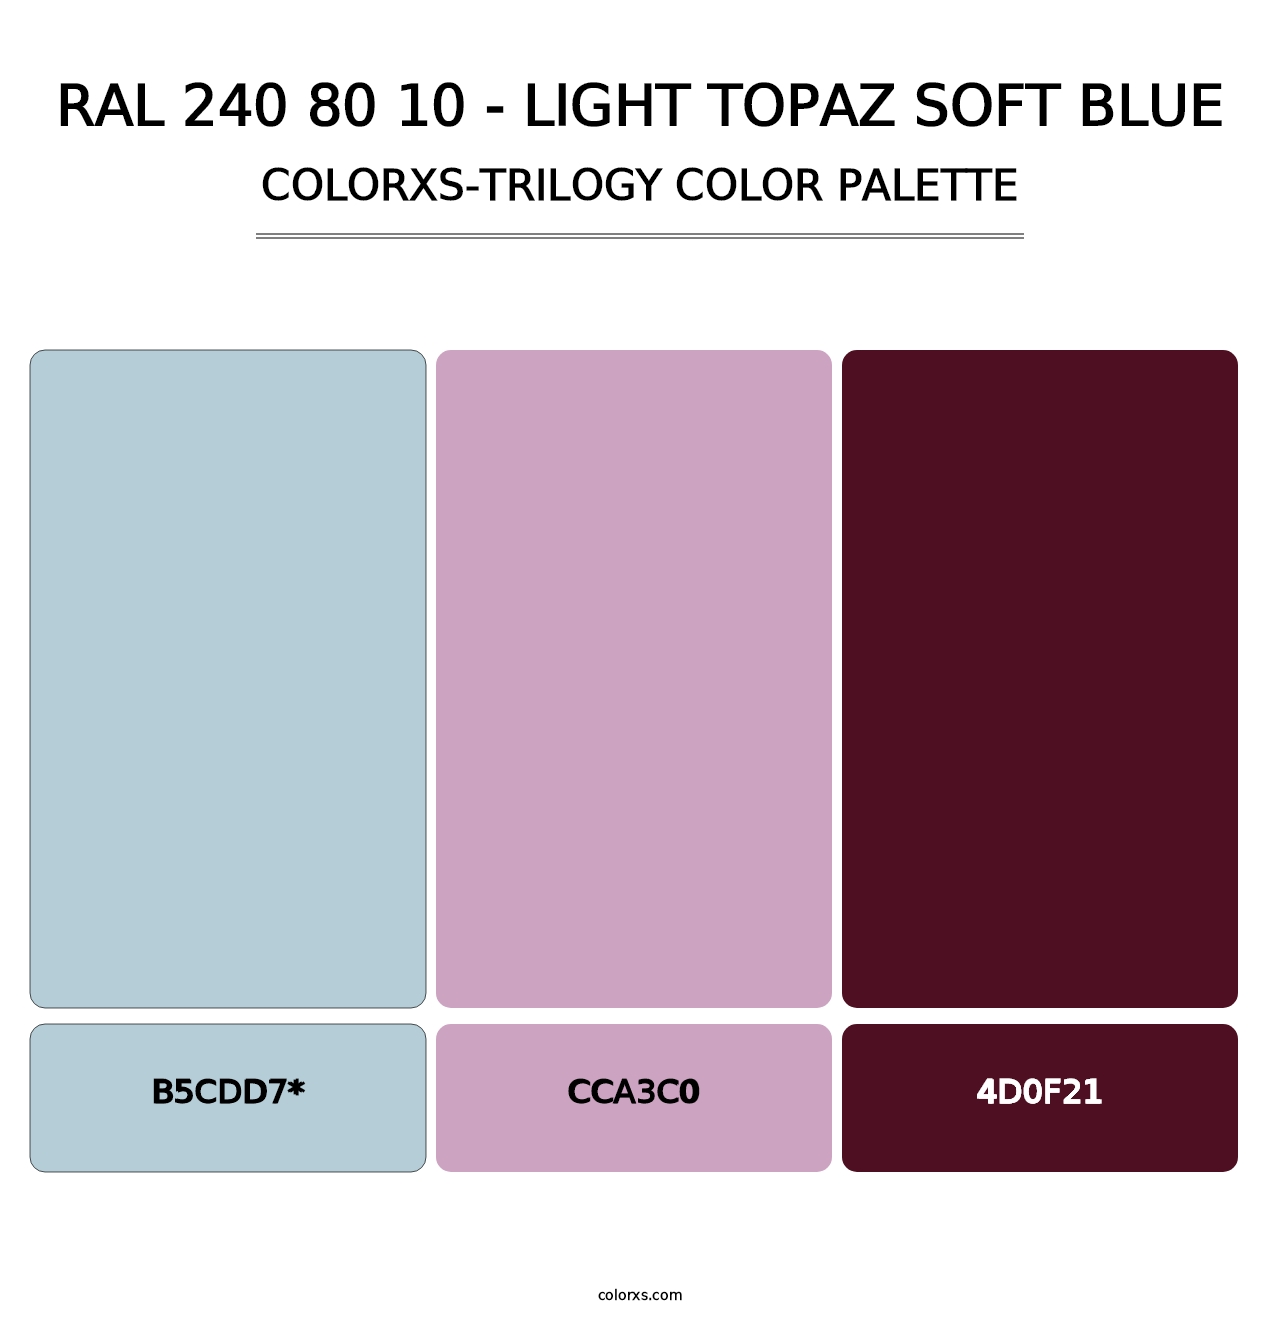 RAL 240 80 10 - Light Topaz Soft Blue - Colorxs Trilogy Palette